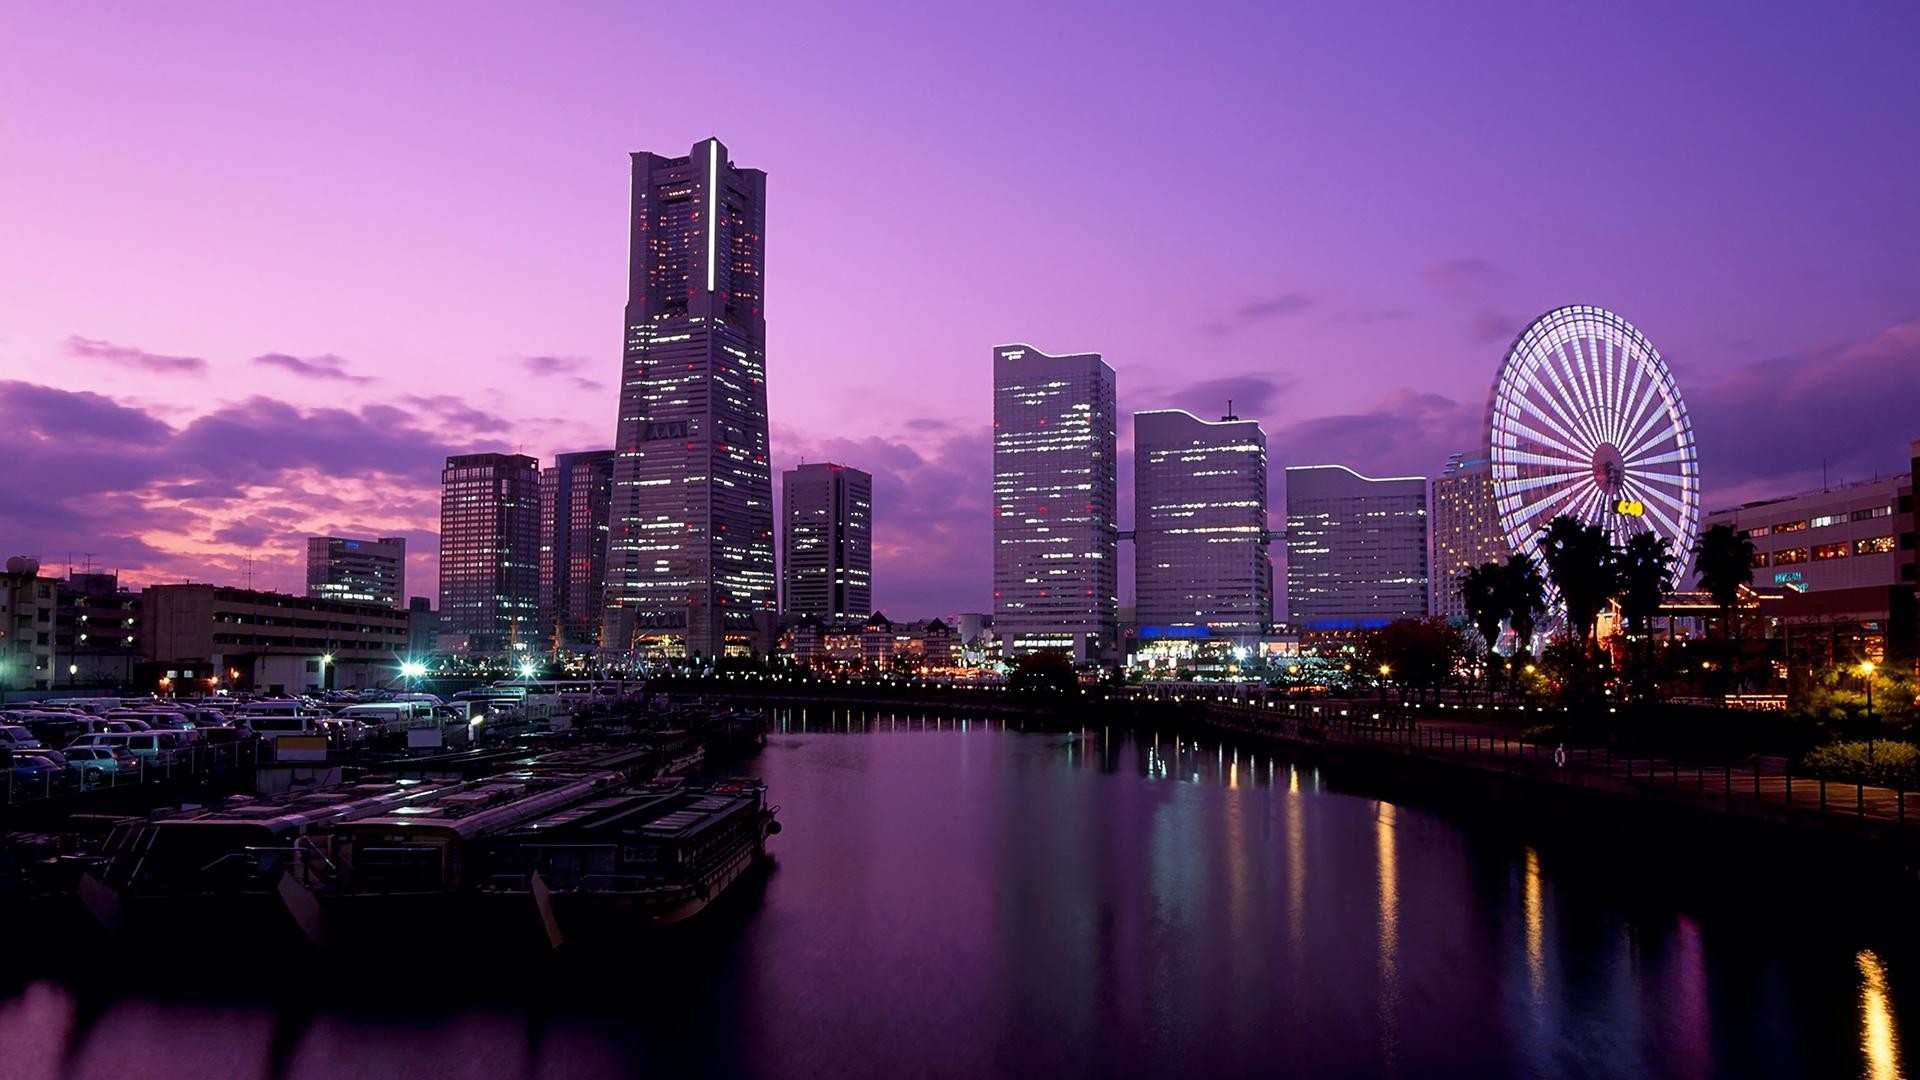 General 1920x1080 cityscape city ferris wheel sunset purple sky Yokohama Japan Asia city lights